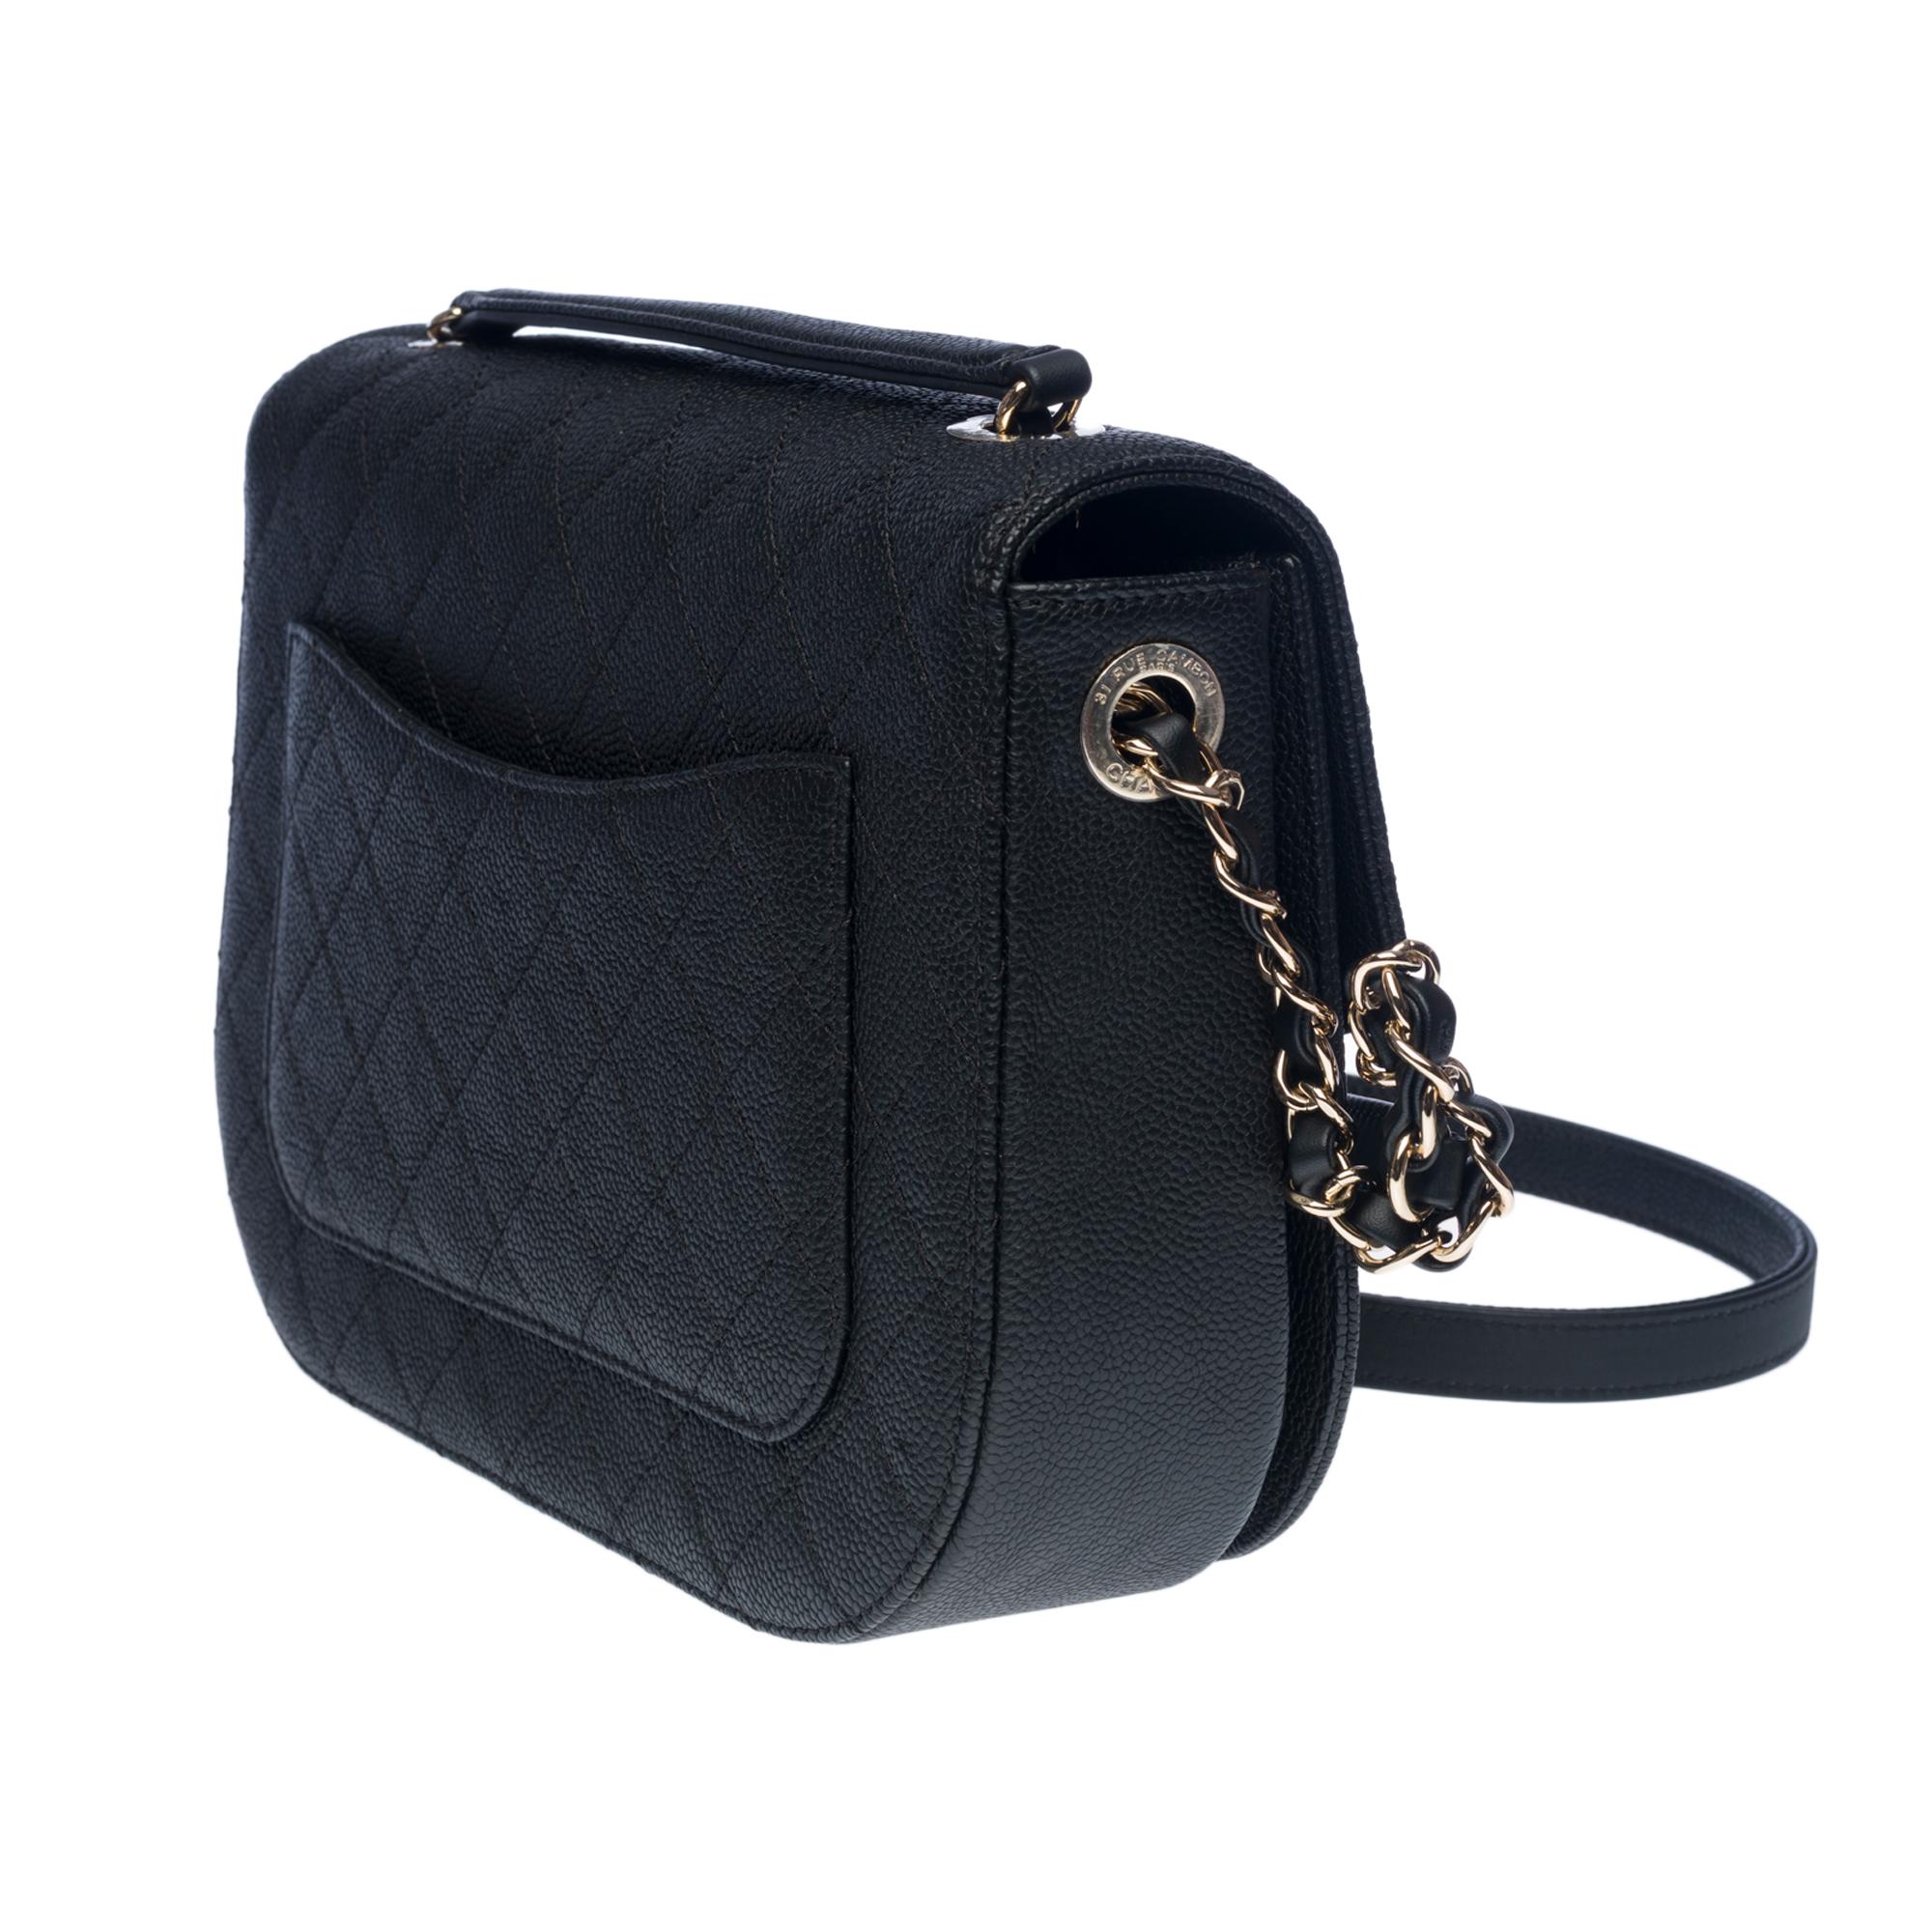 Black RARE Chanel Coco Cuba Medium flap bag in black caviar leather, Champagne HW 